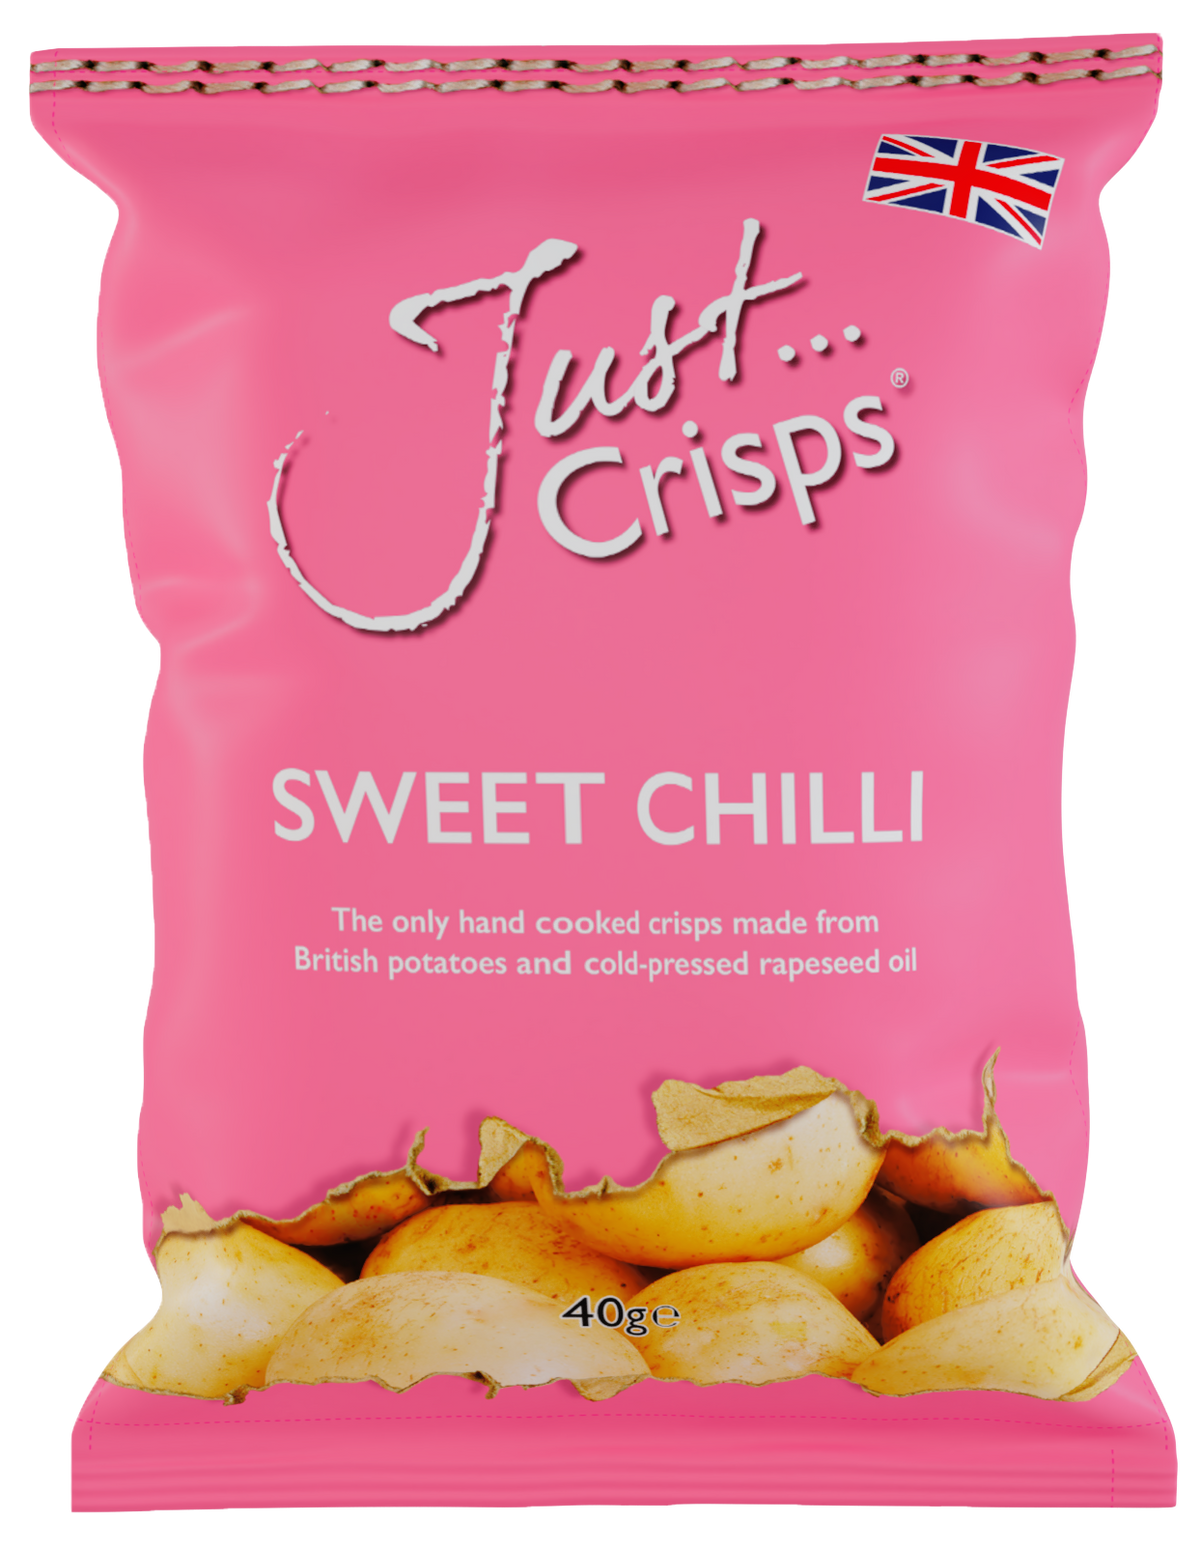 Just Crisps Sweet Chilli 40g x 24